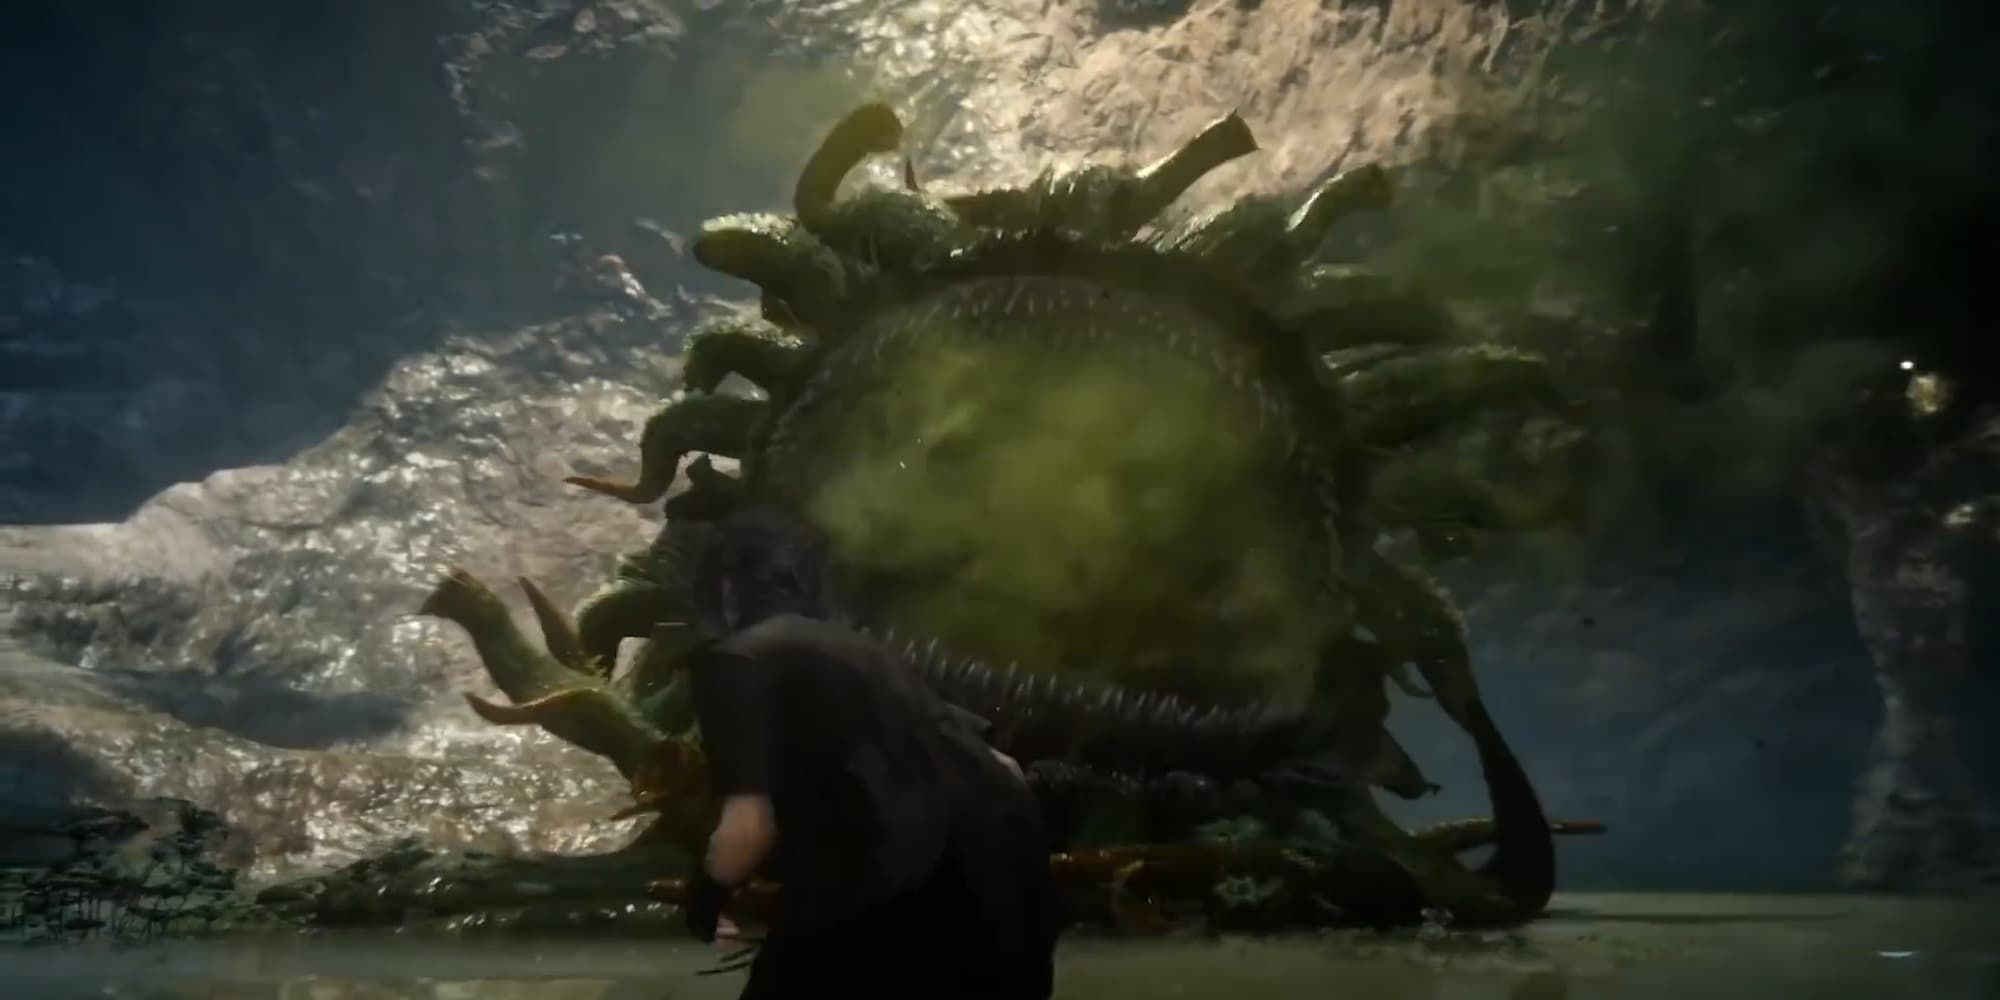 Final Fantasy XV malboro in swamp like area using bad breath attack aimed at party